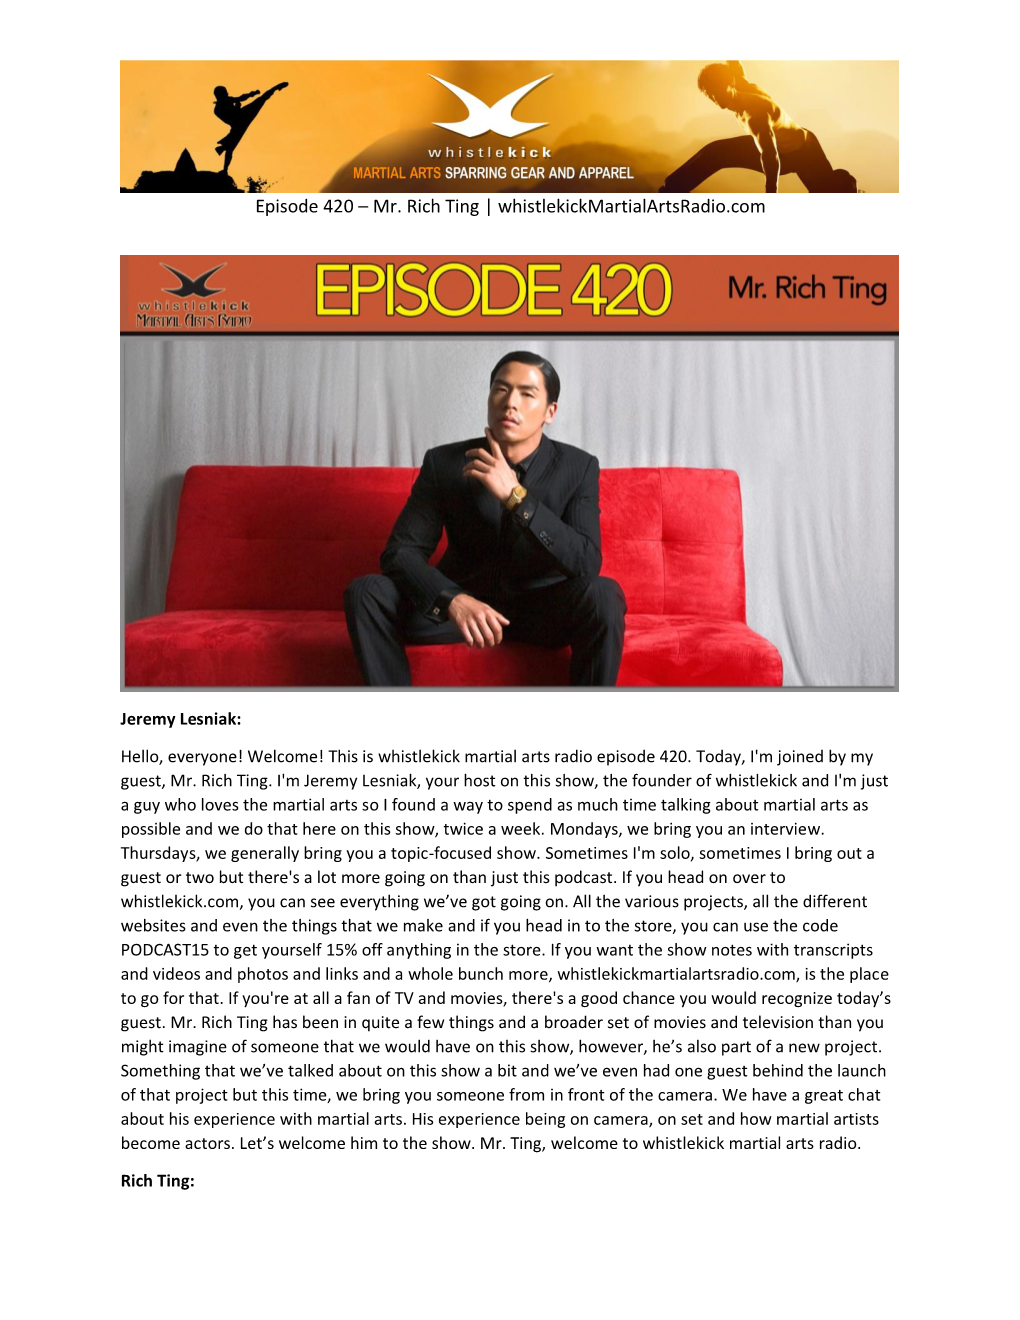 Episode 420 – Mr. Rich Ting | Whistlekickmartialartsradio.Com